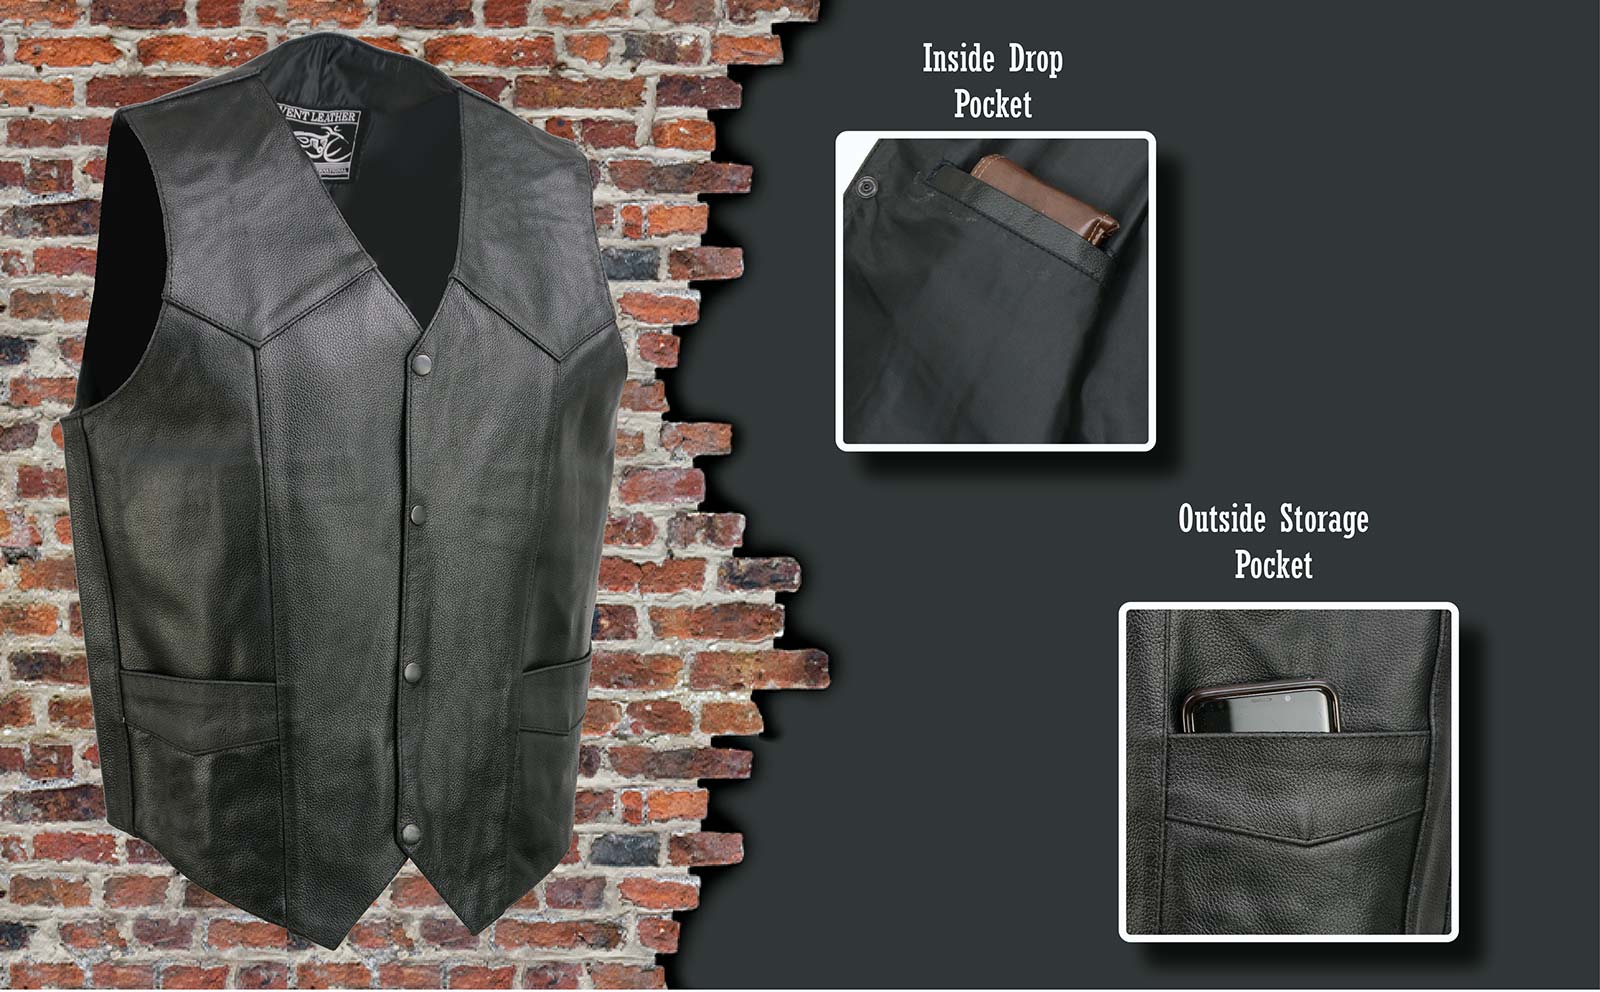 Event Leather EL5310 Black Motorcycle Leather Vest for Men - Riding Club Adult Motorcycle Vests